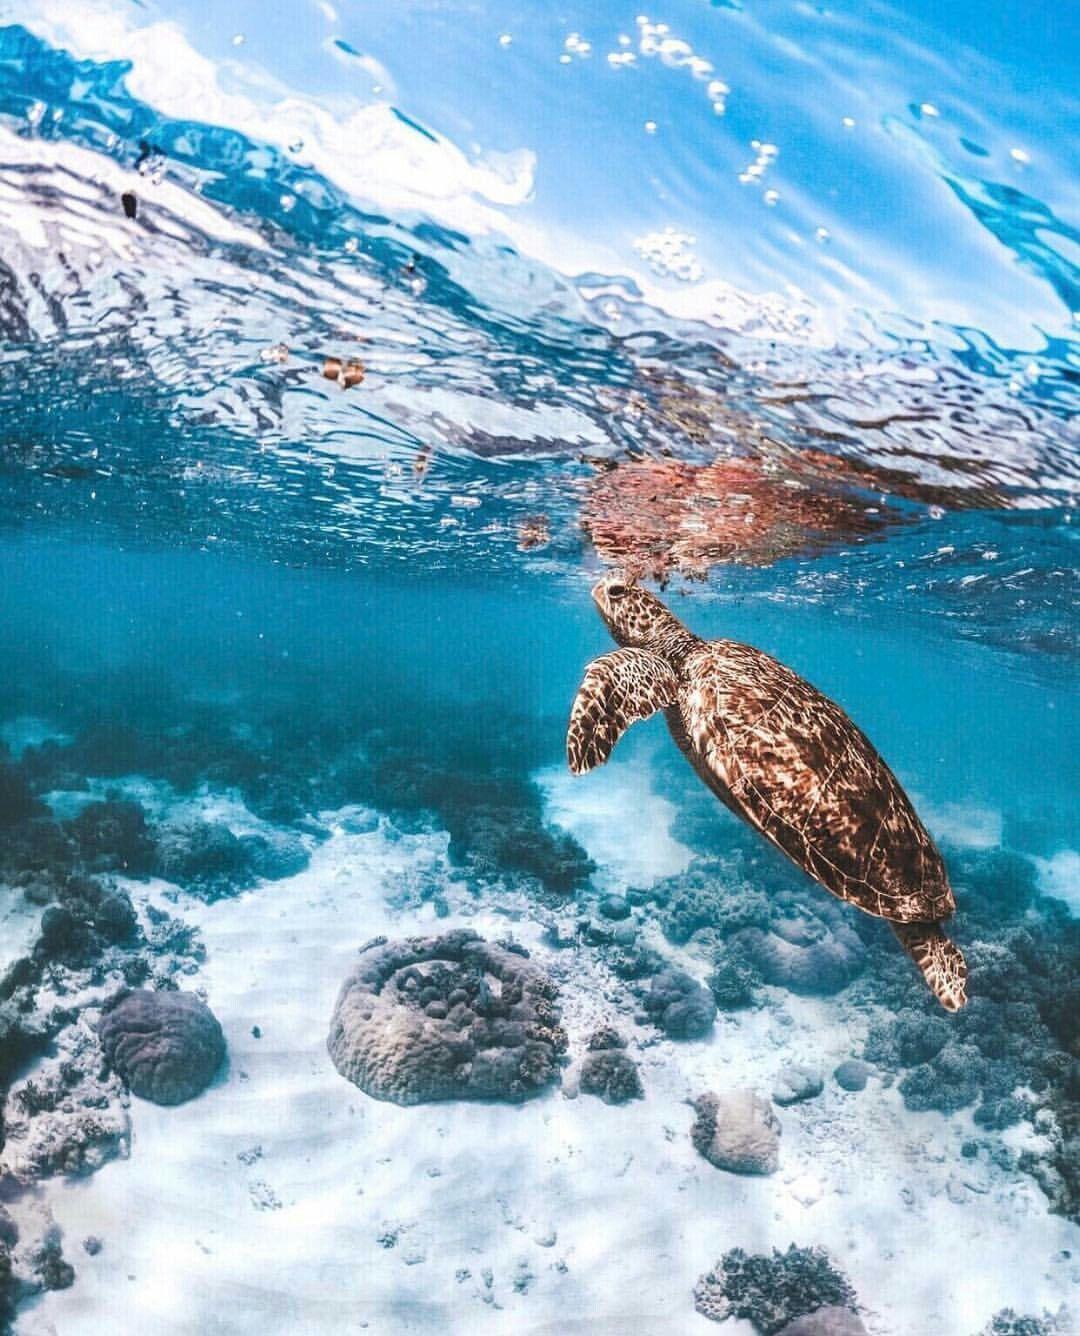 Sea Turtle. Sea turtle picture, Save the sea turtles, Sea turtles photography